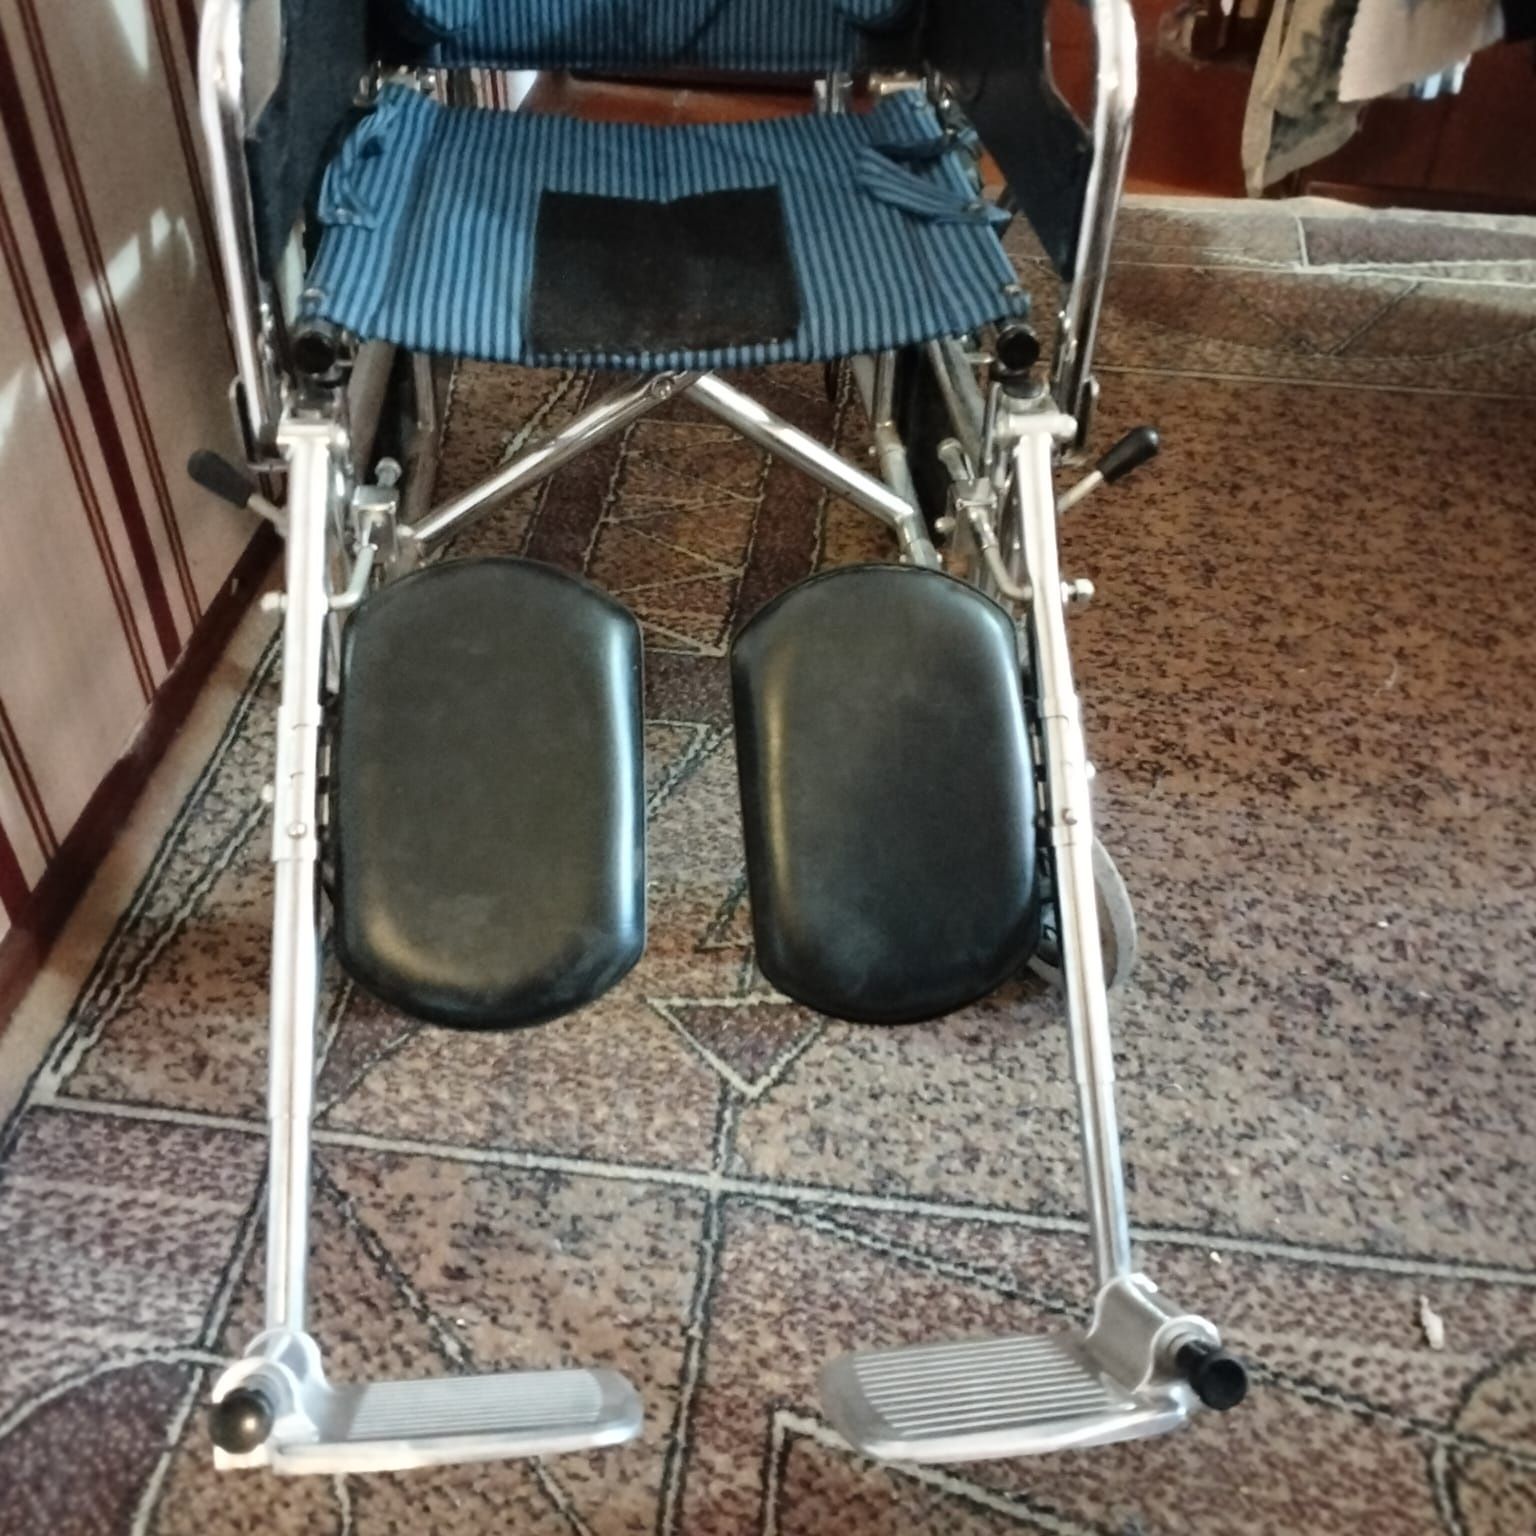 Продам инвалидную коляску.